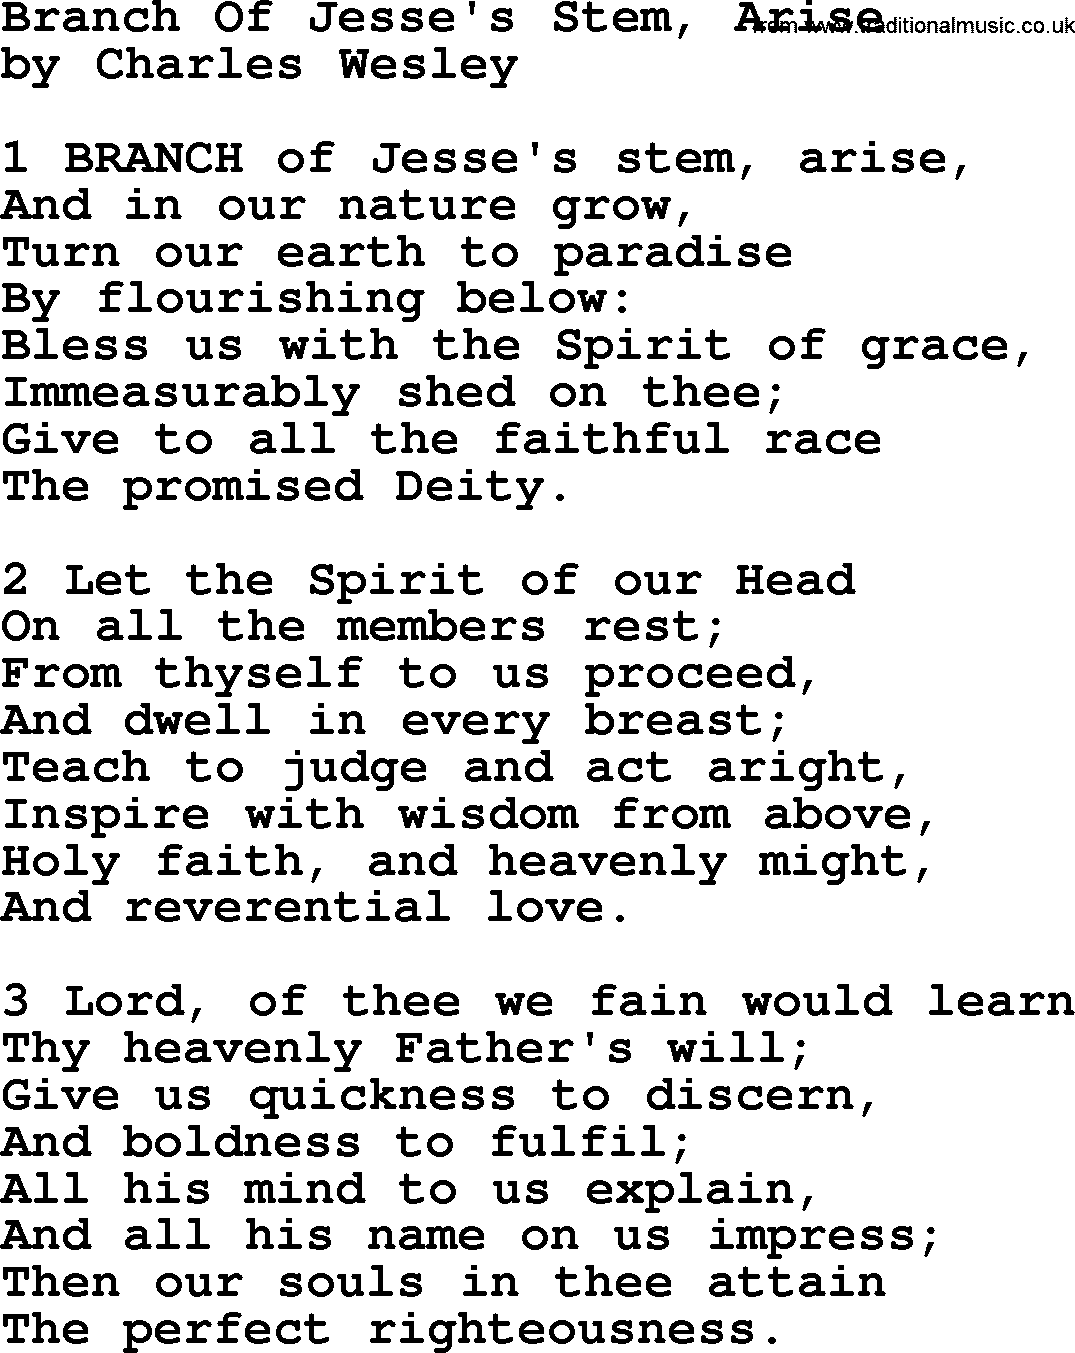 Charles Wesley hymn: Branch Of Jesse's Stem, Arise, lyrics